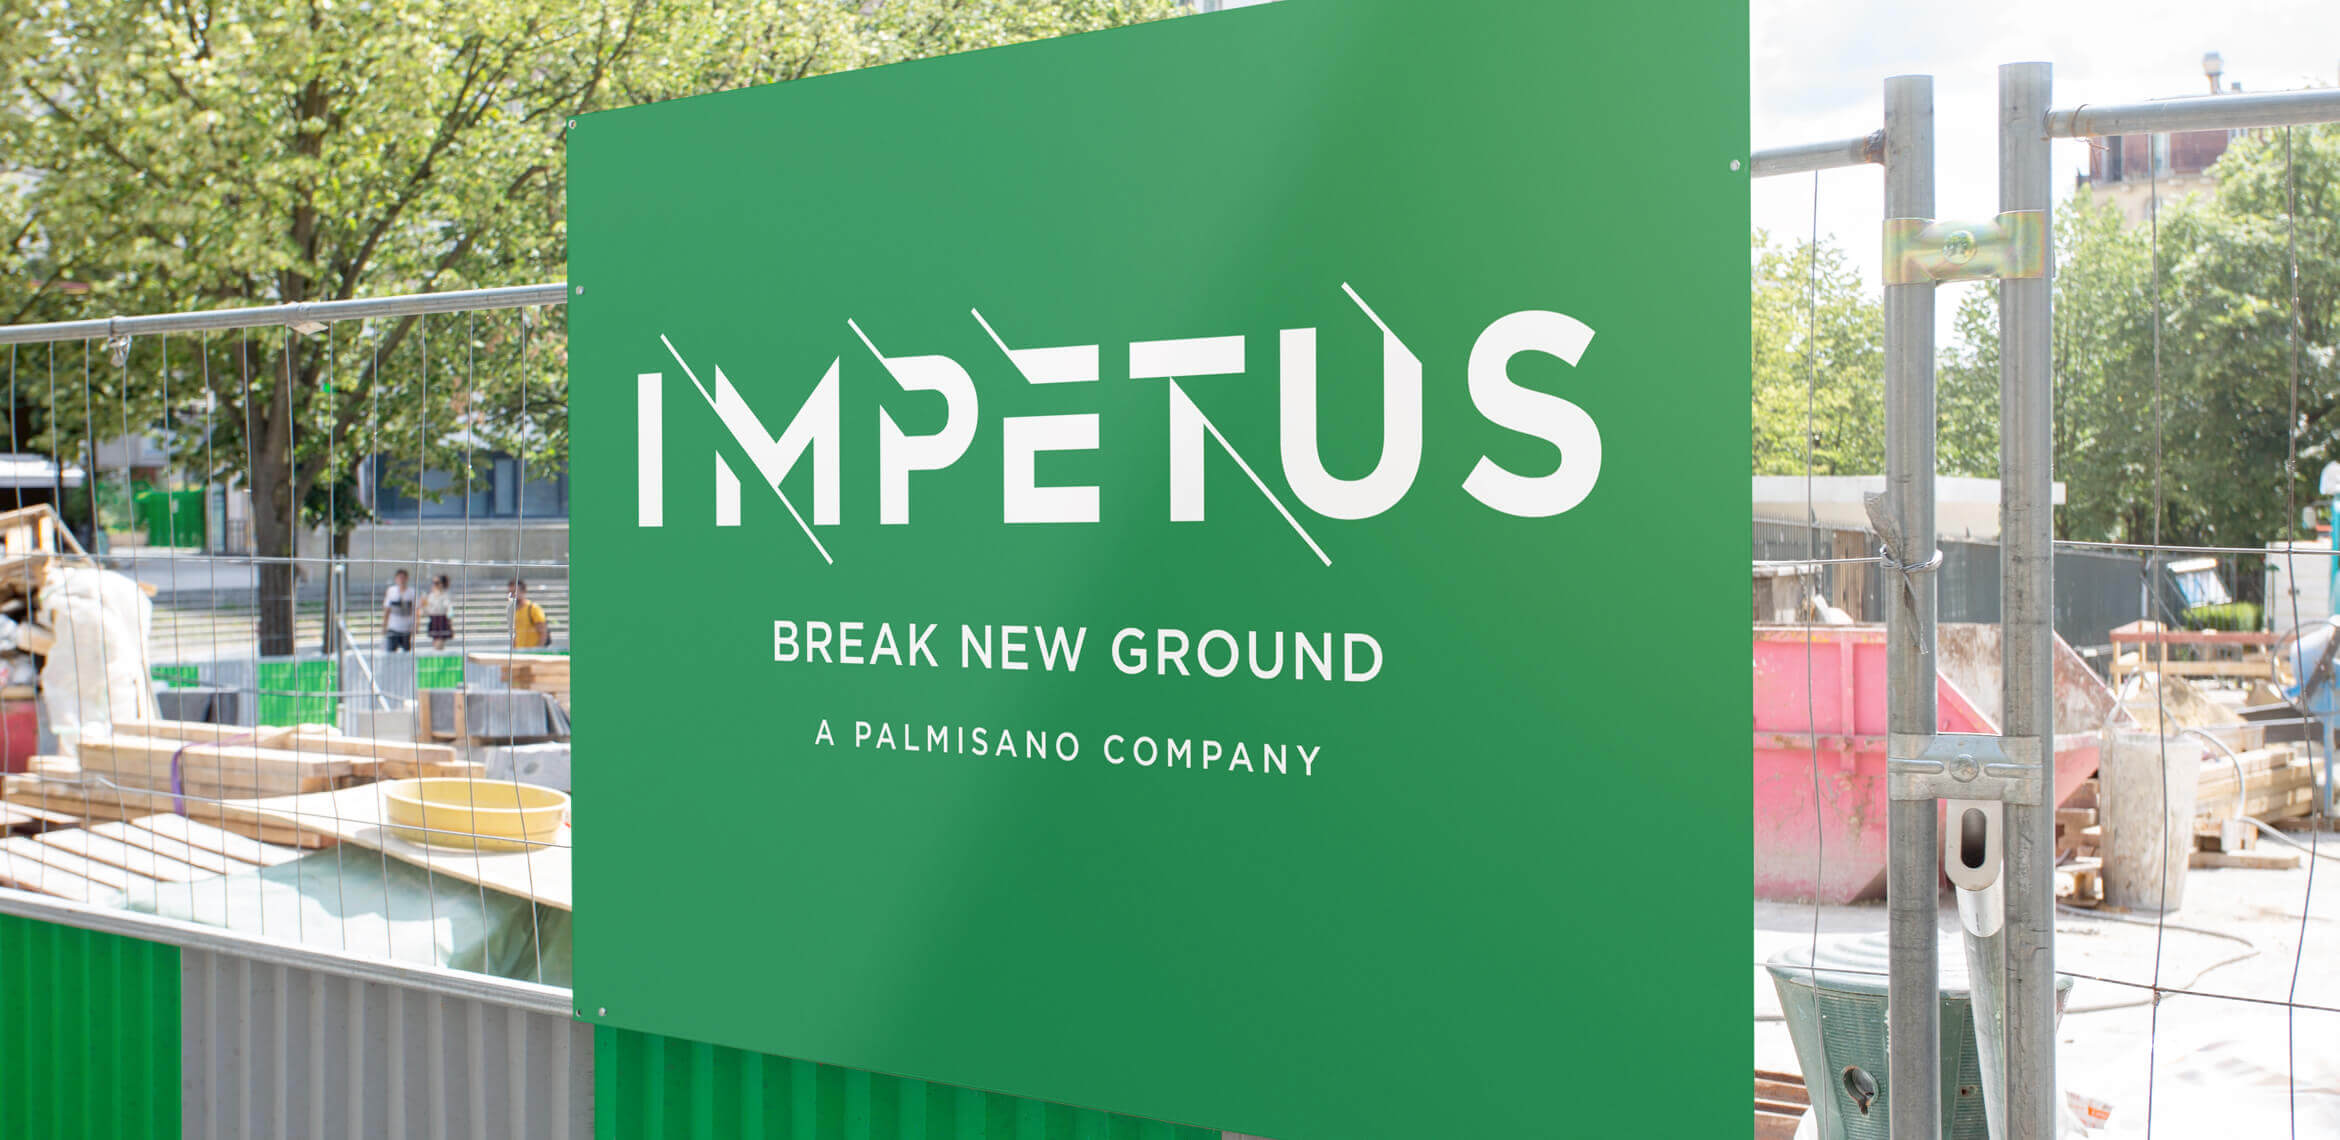 Impetus-logo-Signage